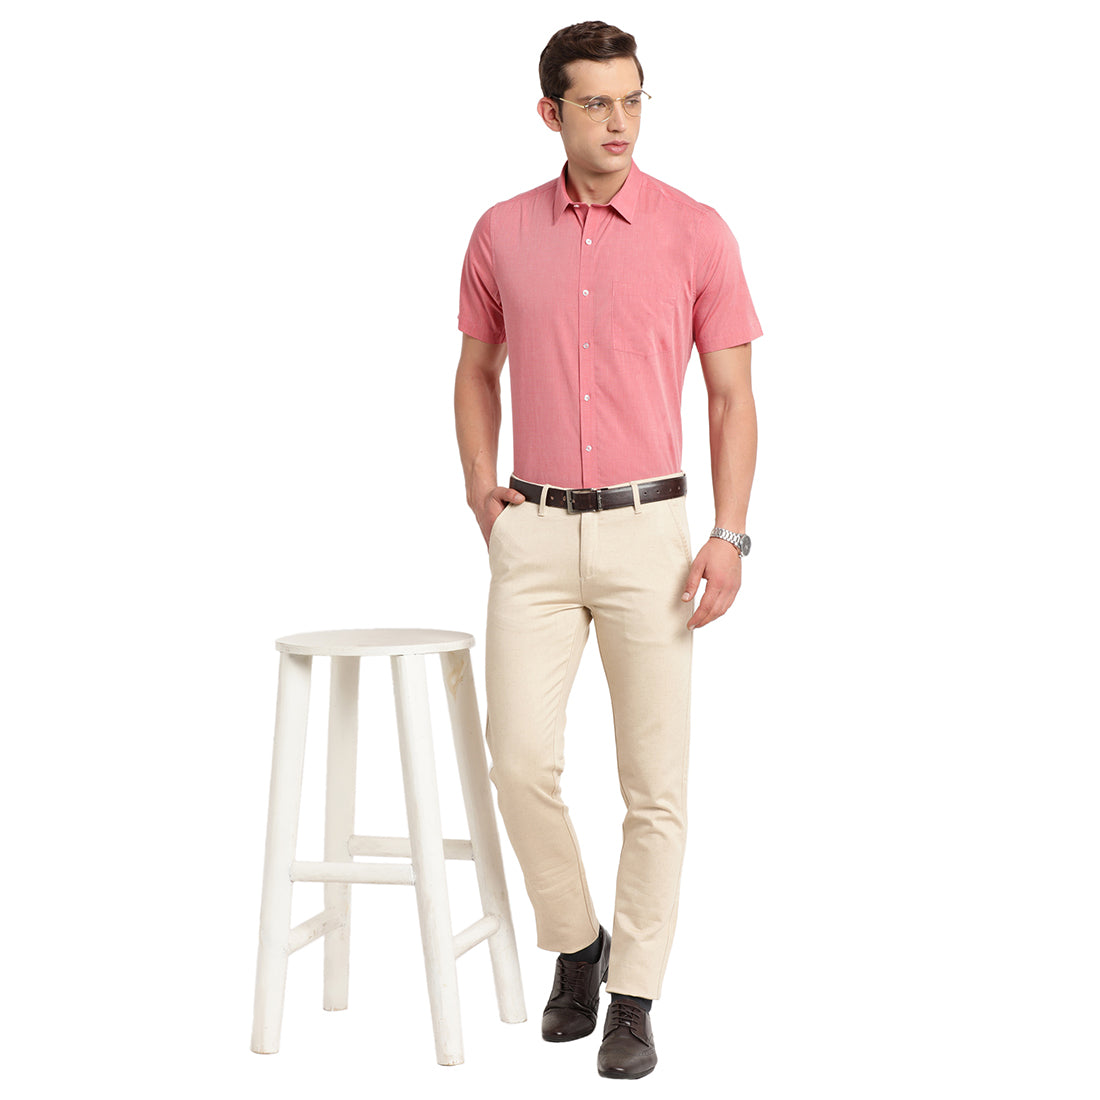 100% Cotton Red Plain Regular Fit Half Sleeve Formal Shirt